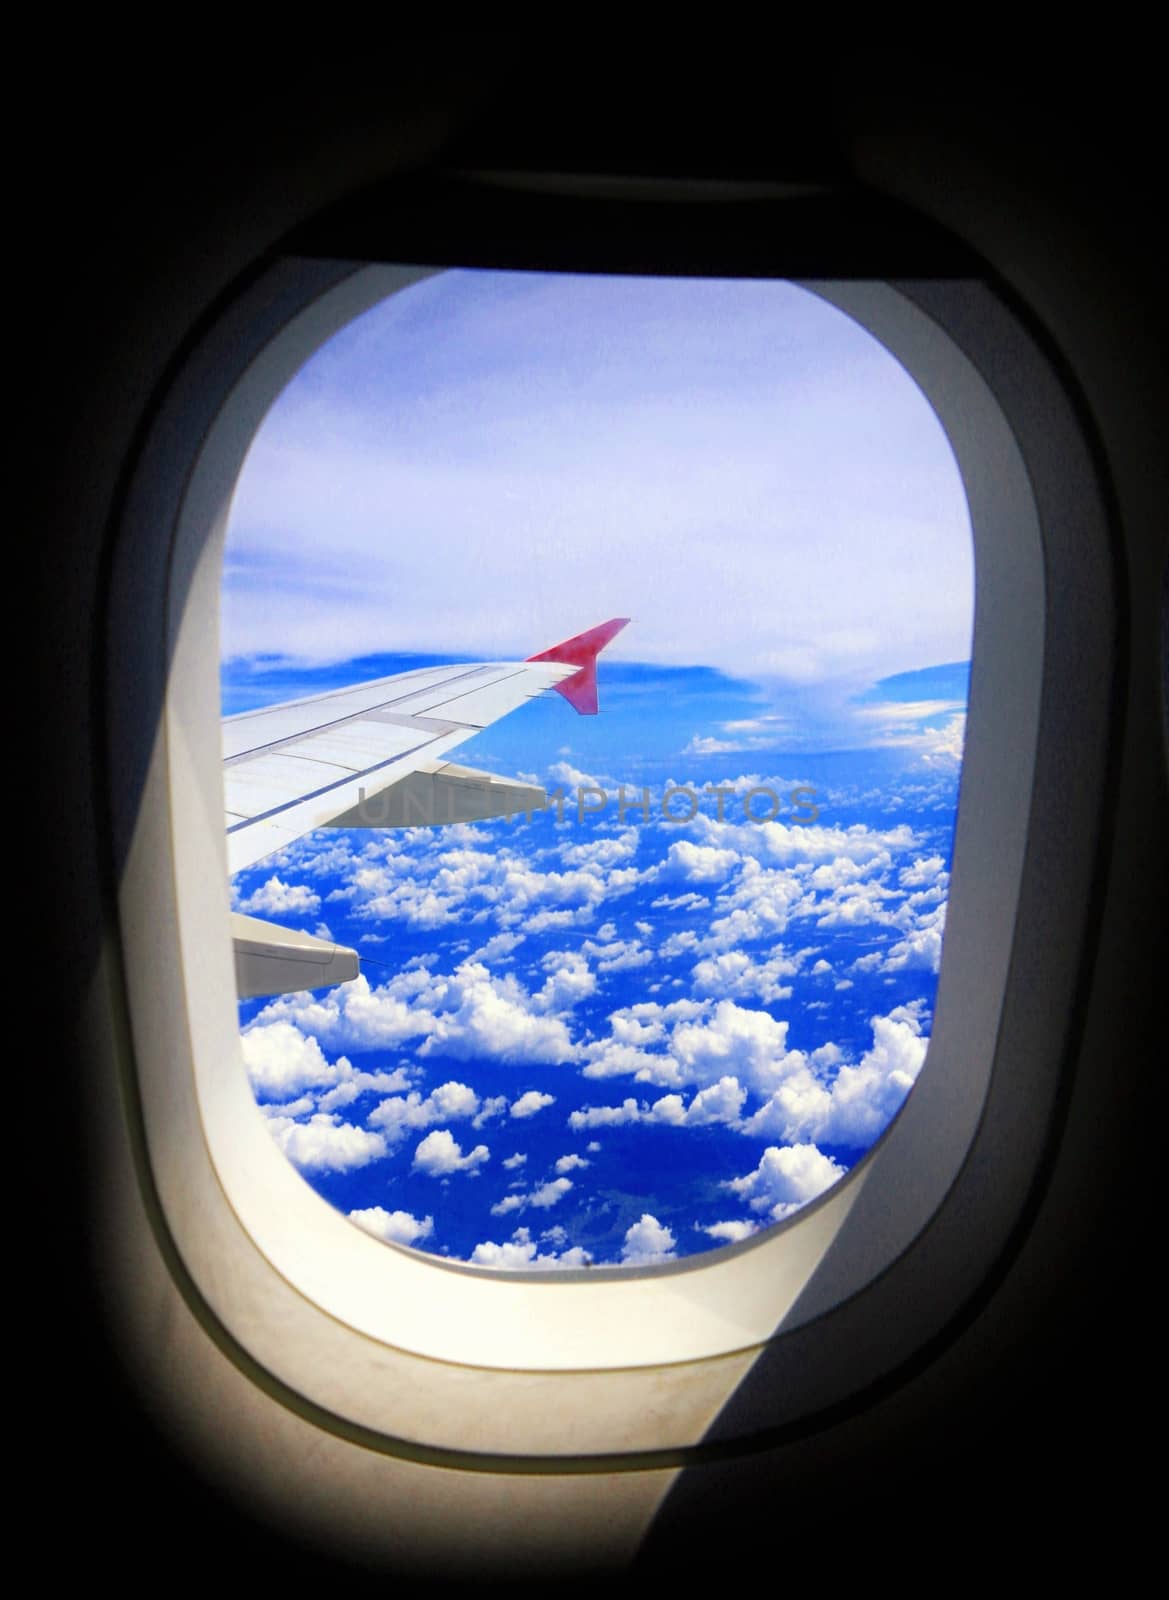 Airplane window view by razihusin